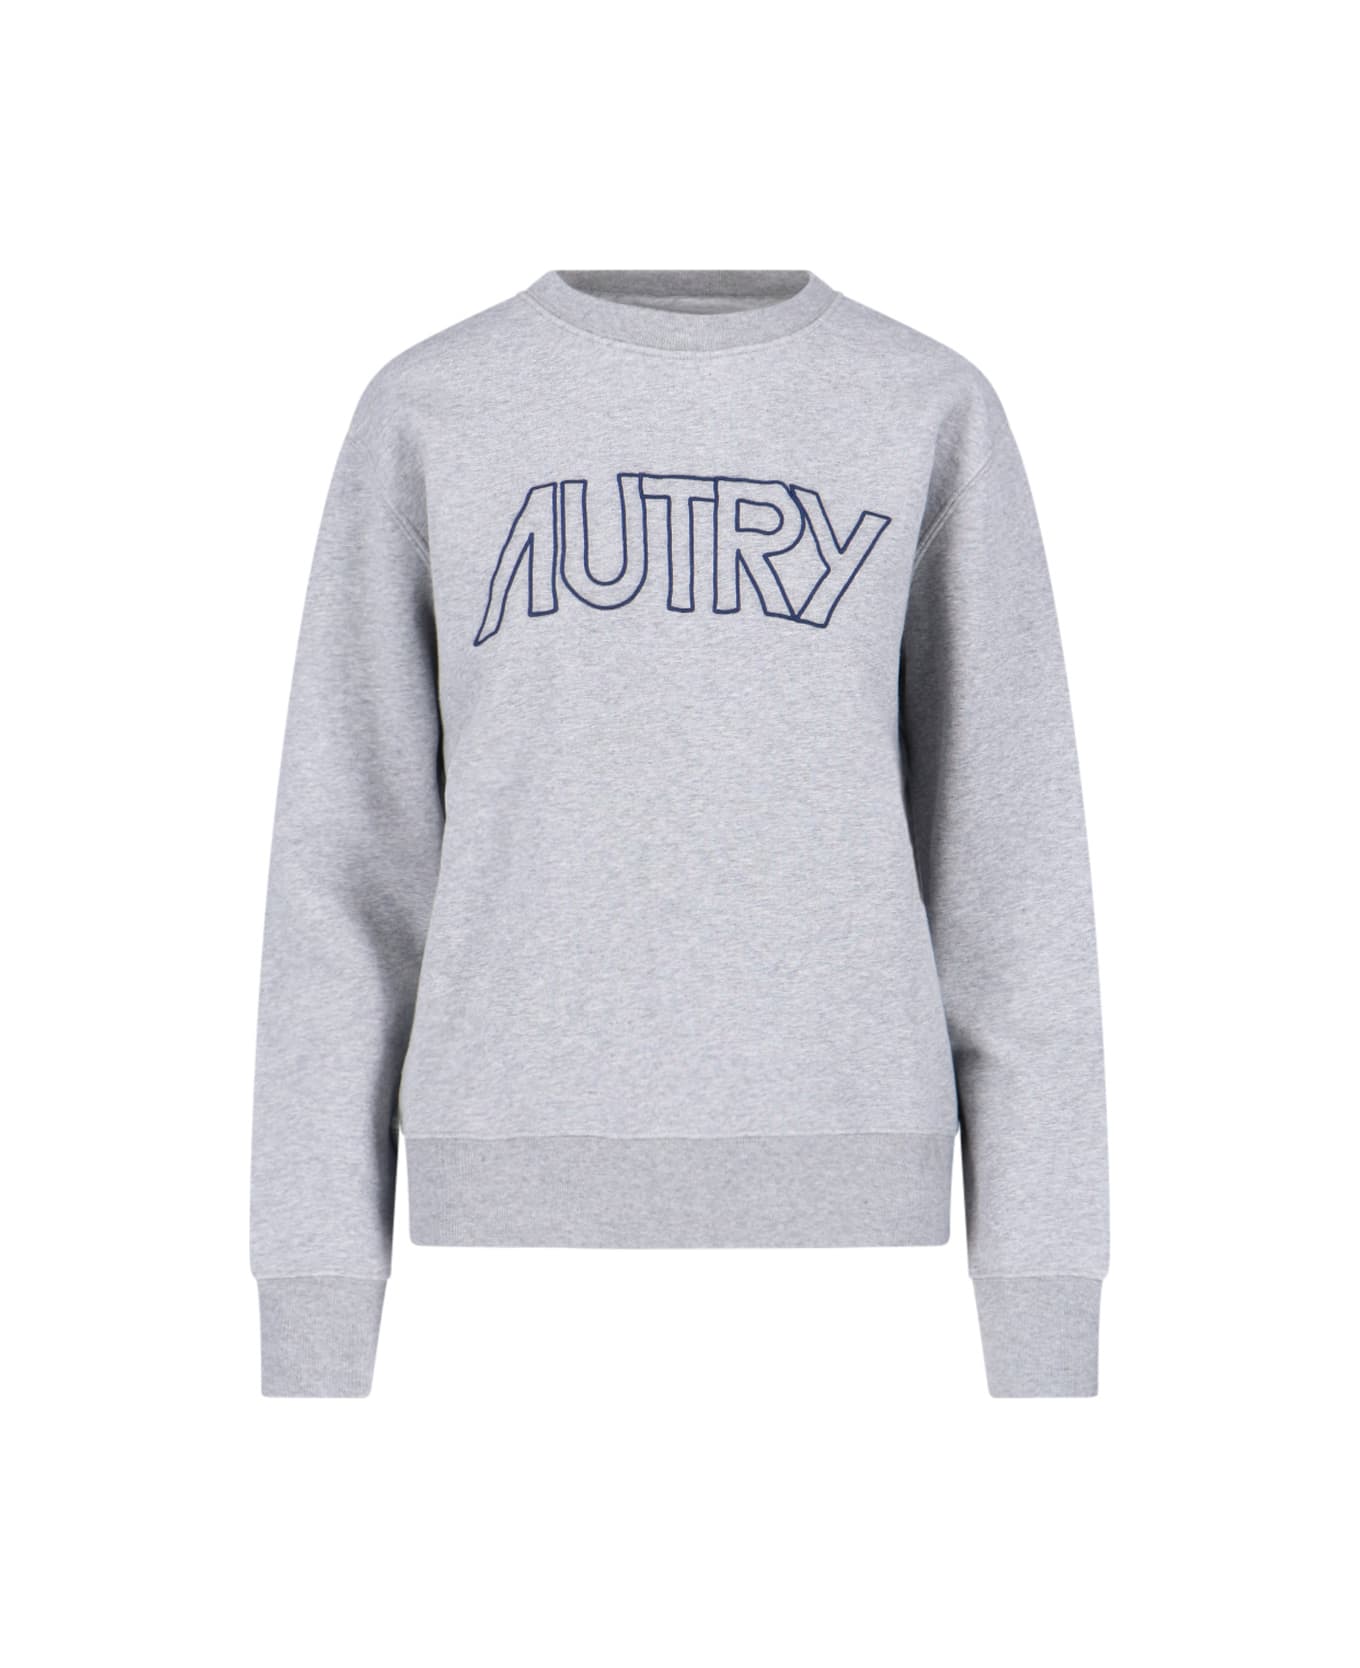 Autry Logo Embroidery Bib Sweatshirt - Grey